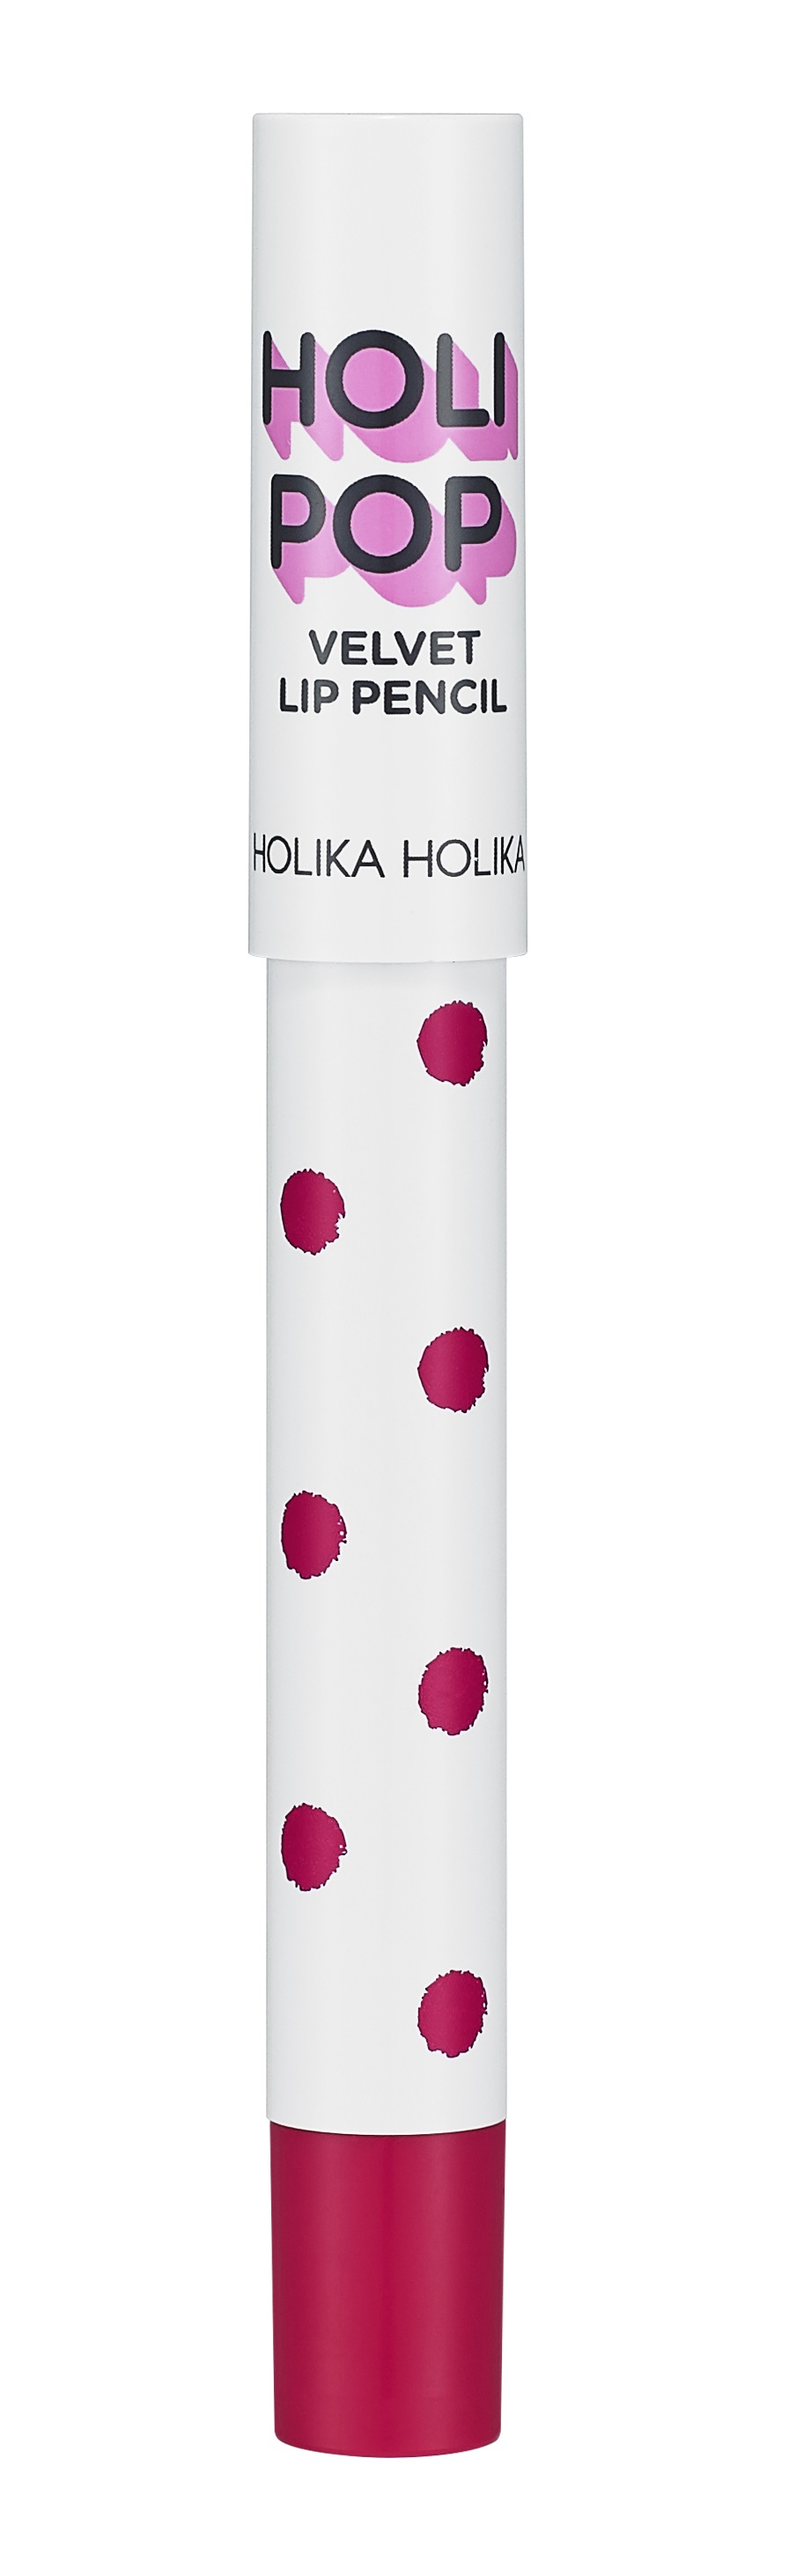 HOLIKA HOLIKA Карандаш матовый для губ Холипоп Вельвет, PK02 малиновый / Holipop Velvet Lip Pencil PK02 berry 1,7 г